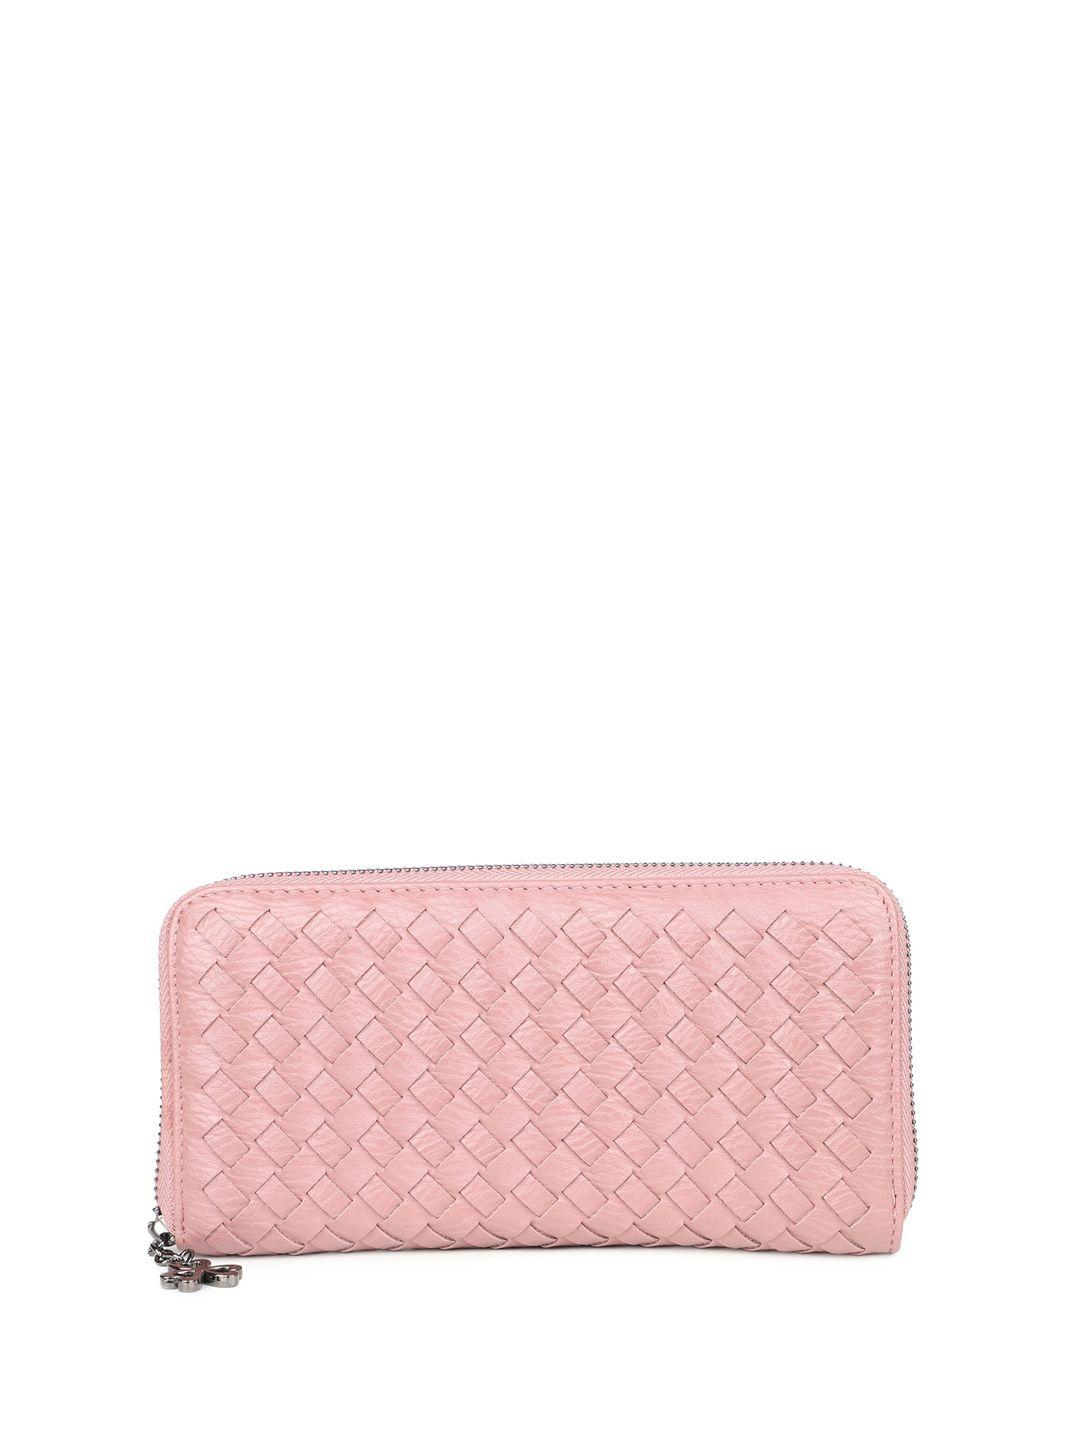 inc 5 textured purse clutch